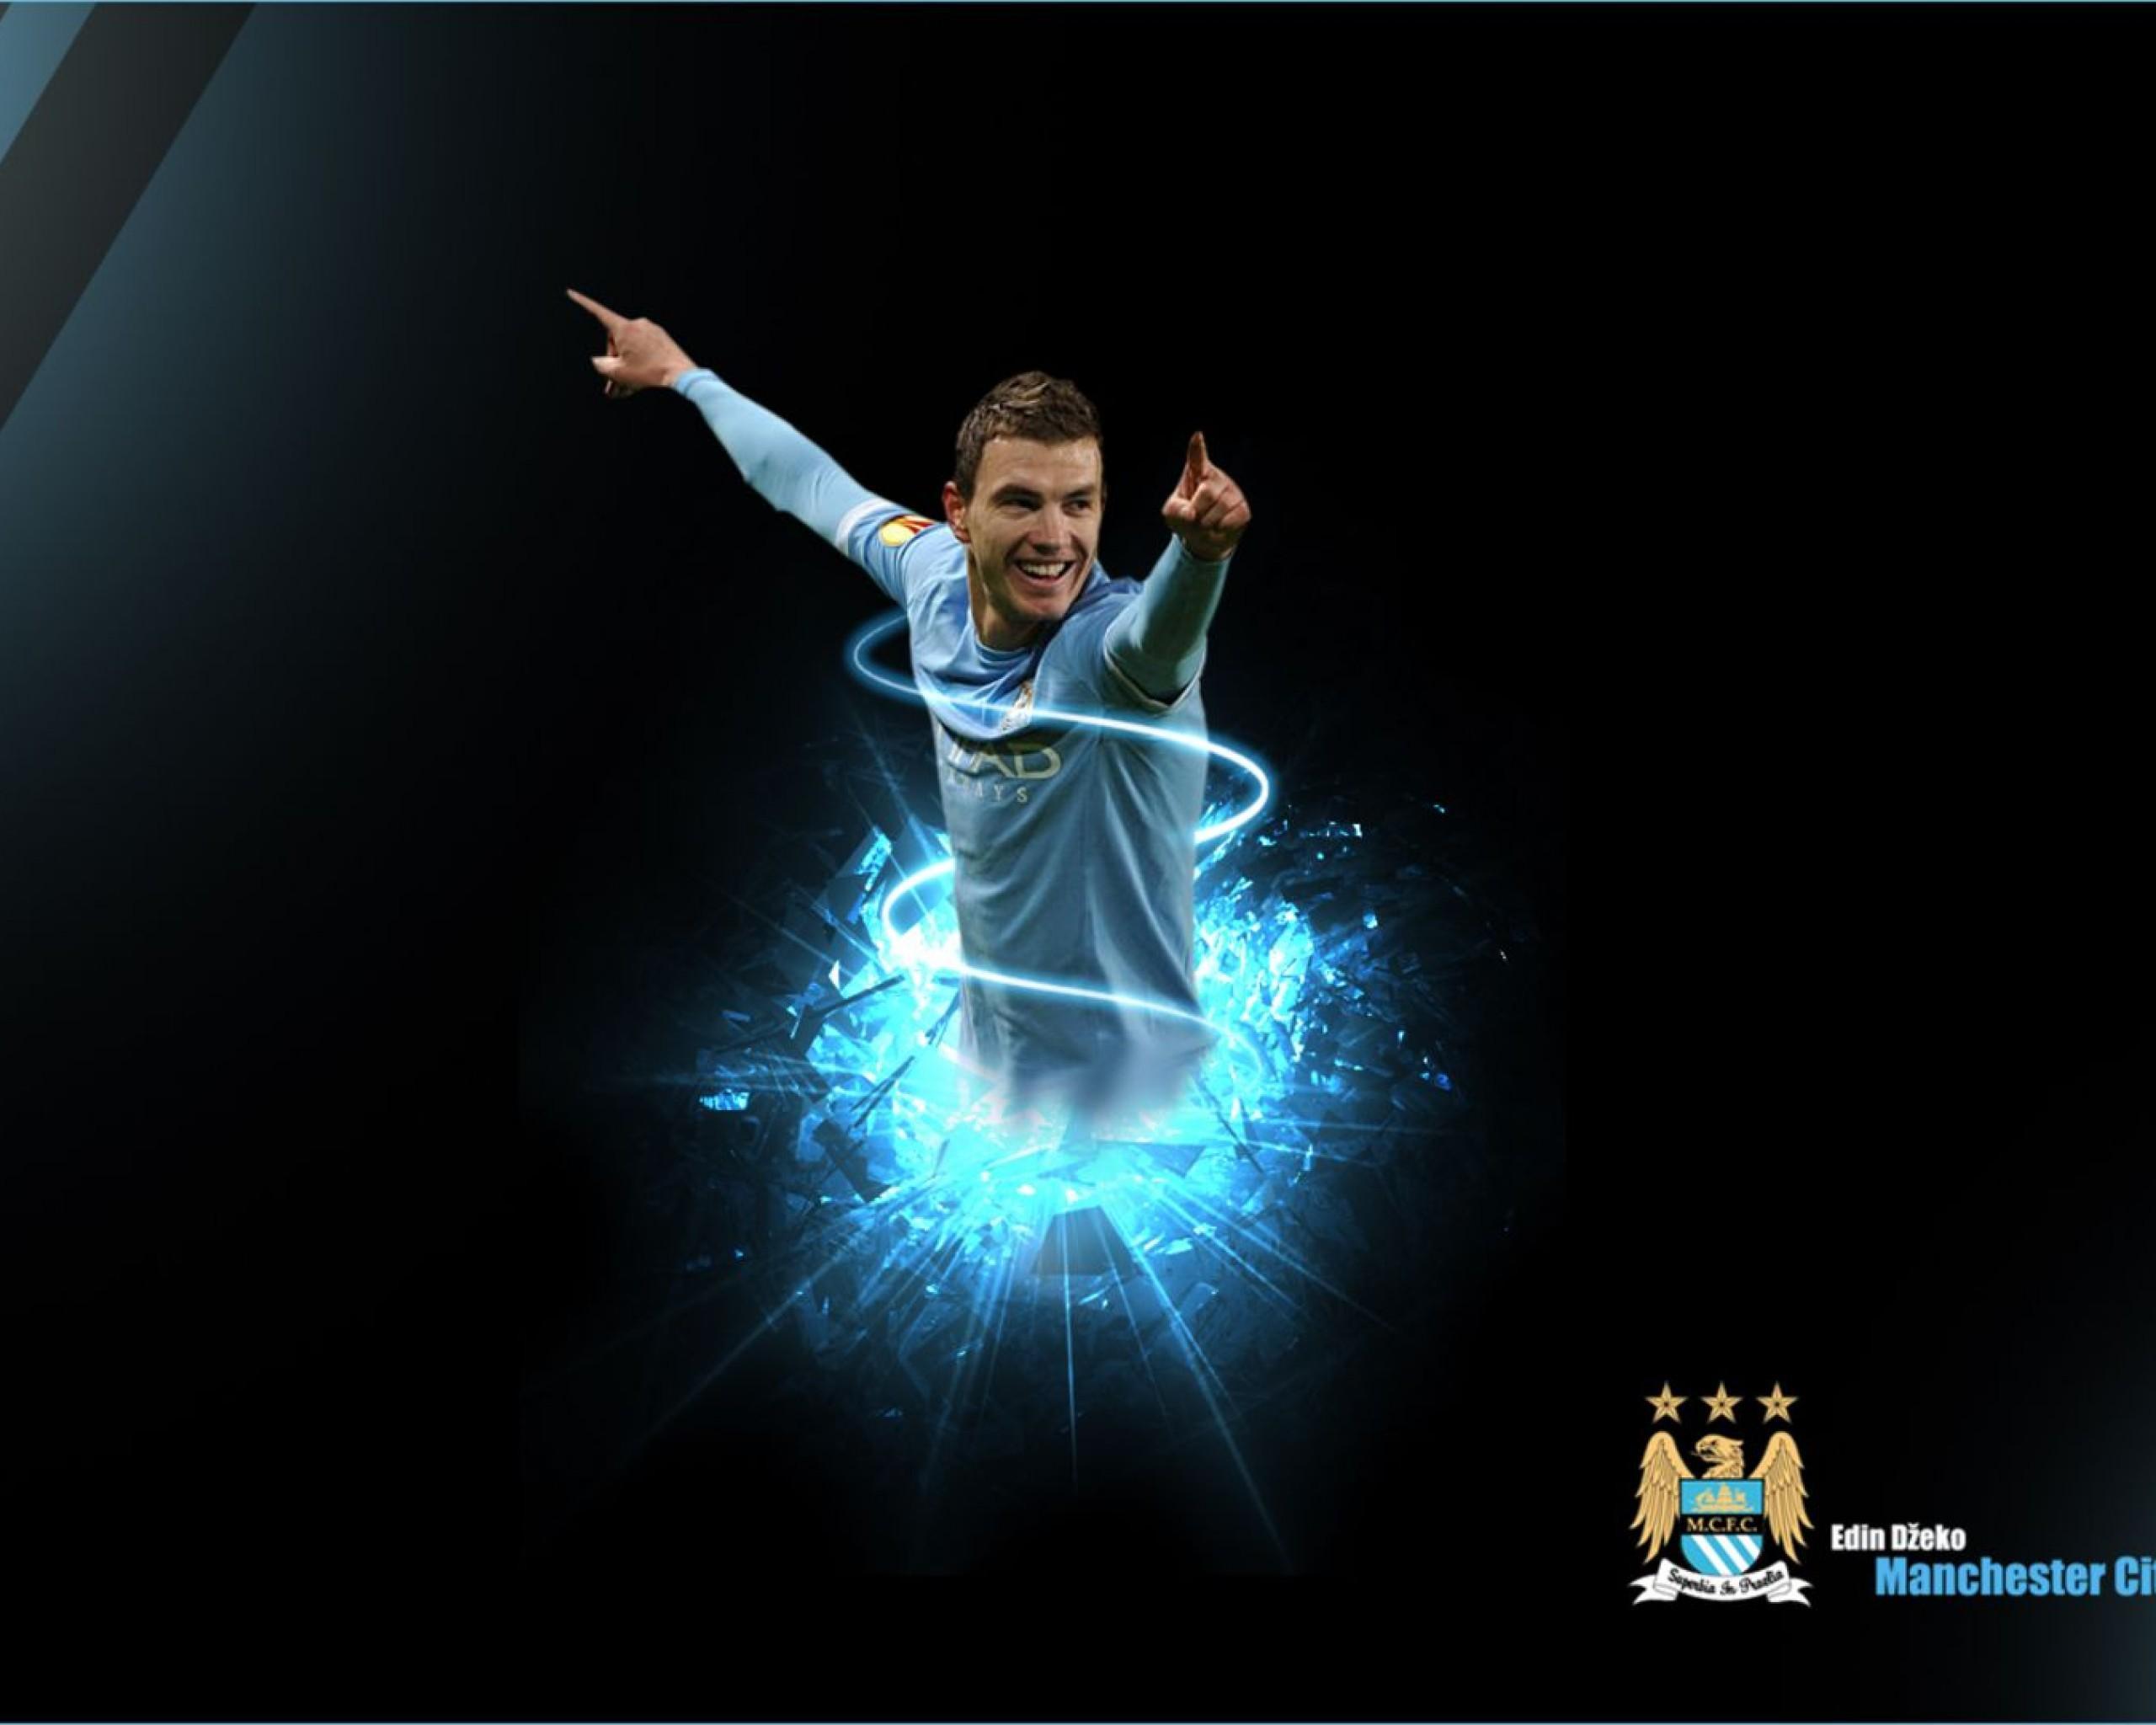 Edin Dzeko Manchester City 2014 desktop image for download